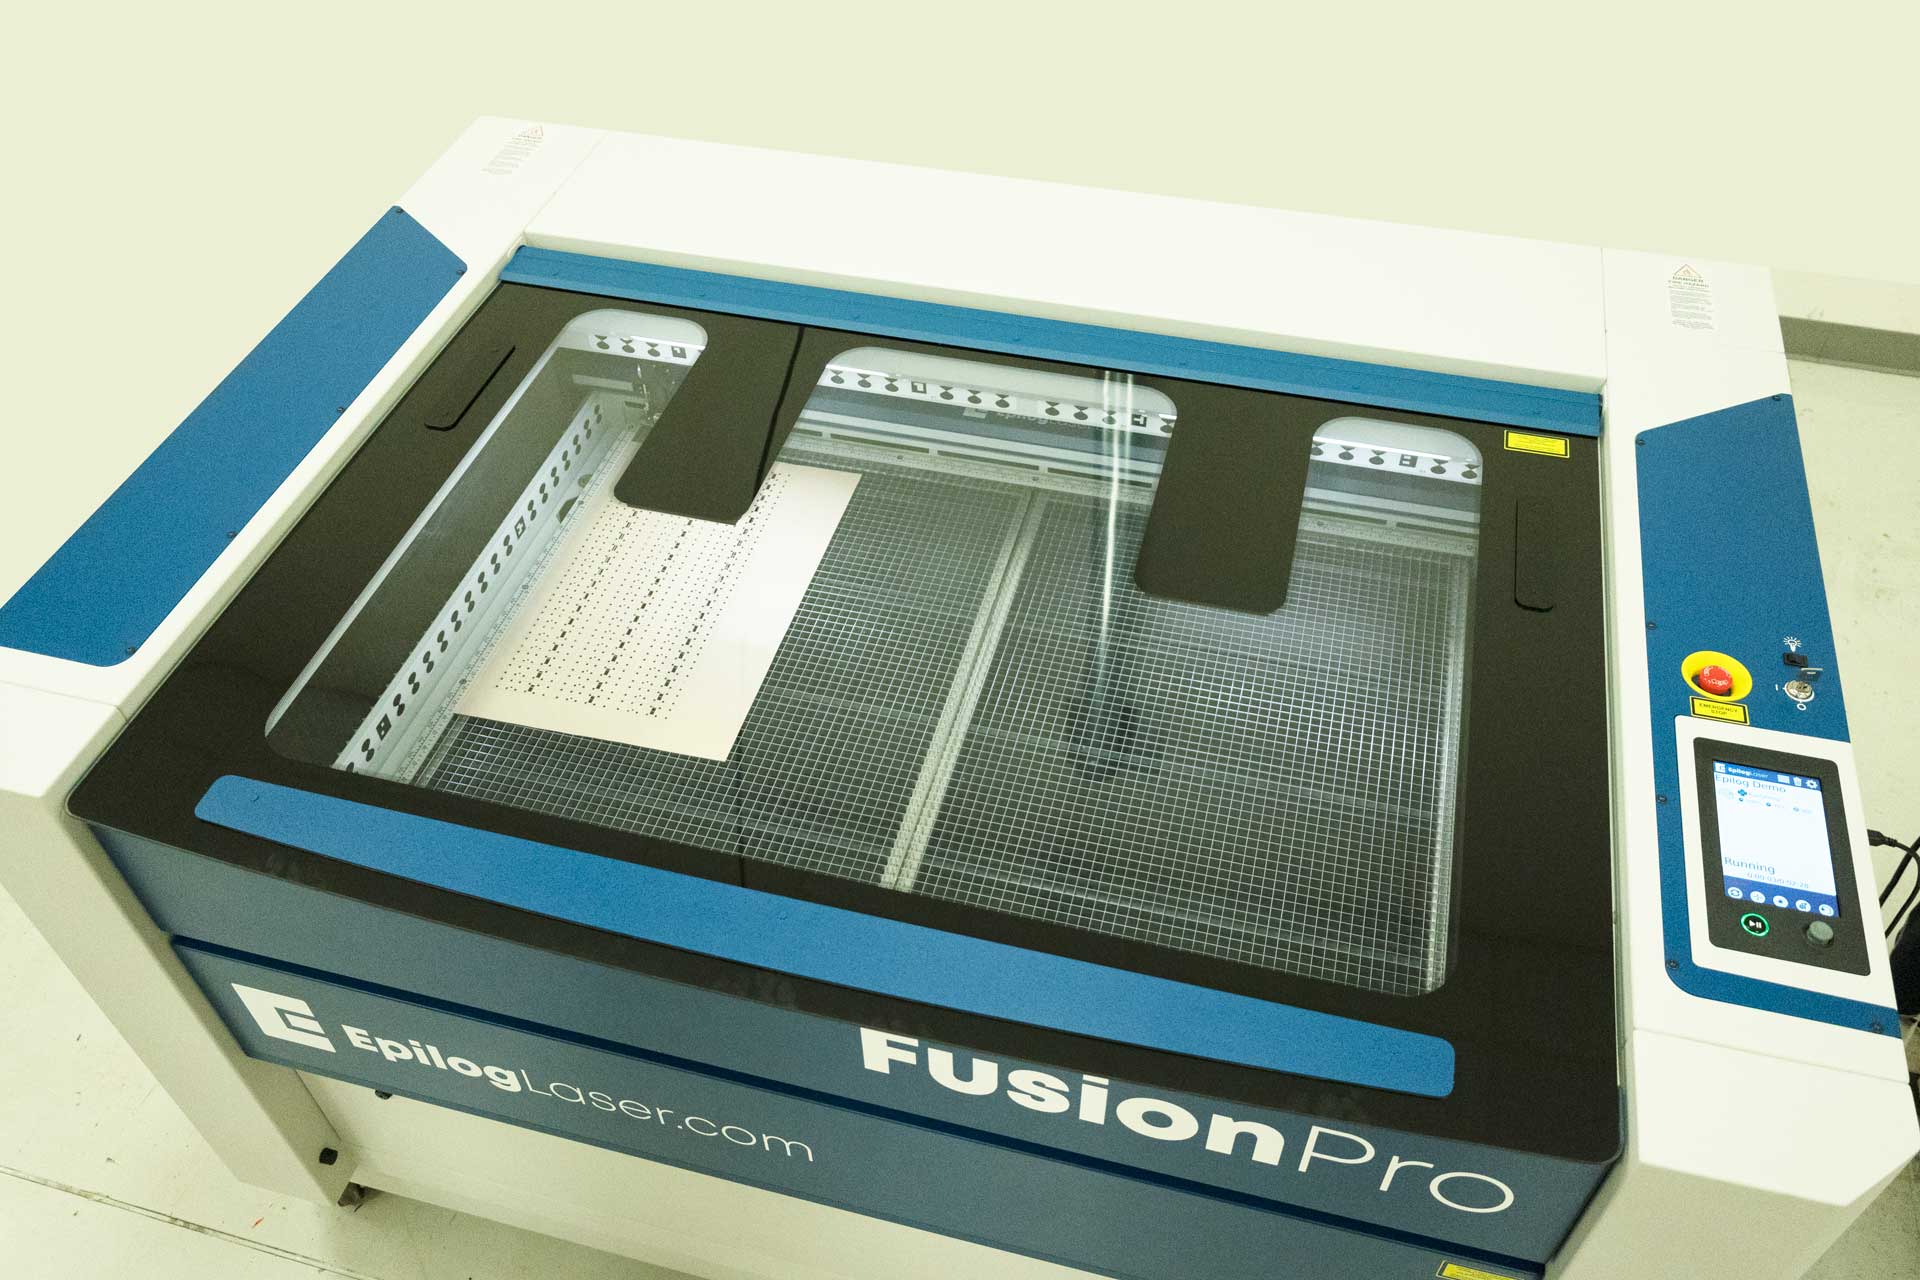 Take Advantage of the New Epilog Fusion Pro Laser